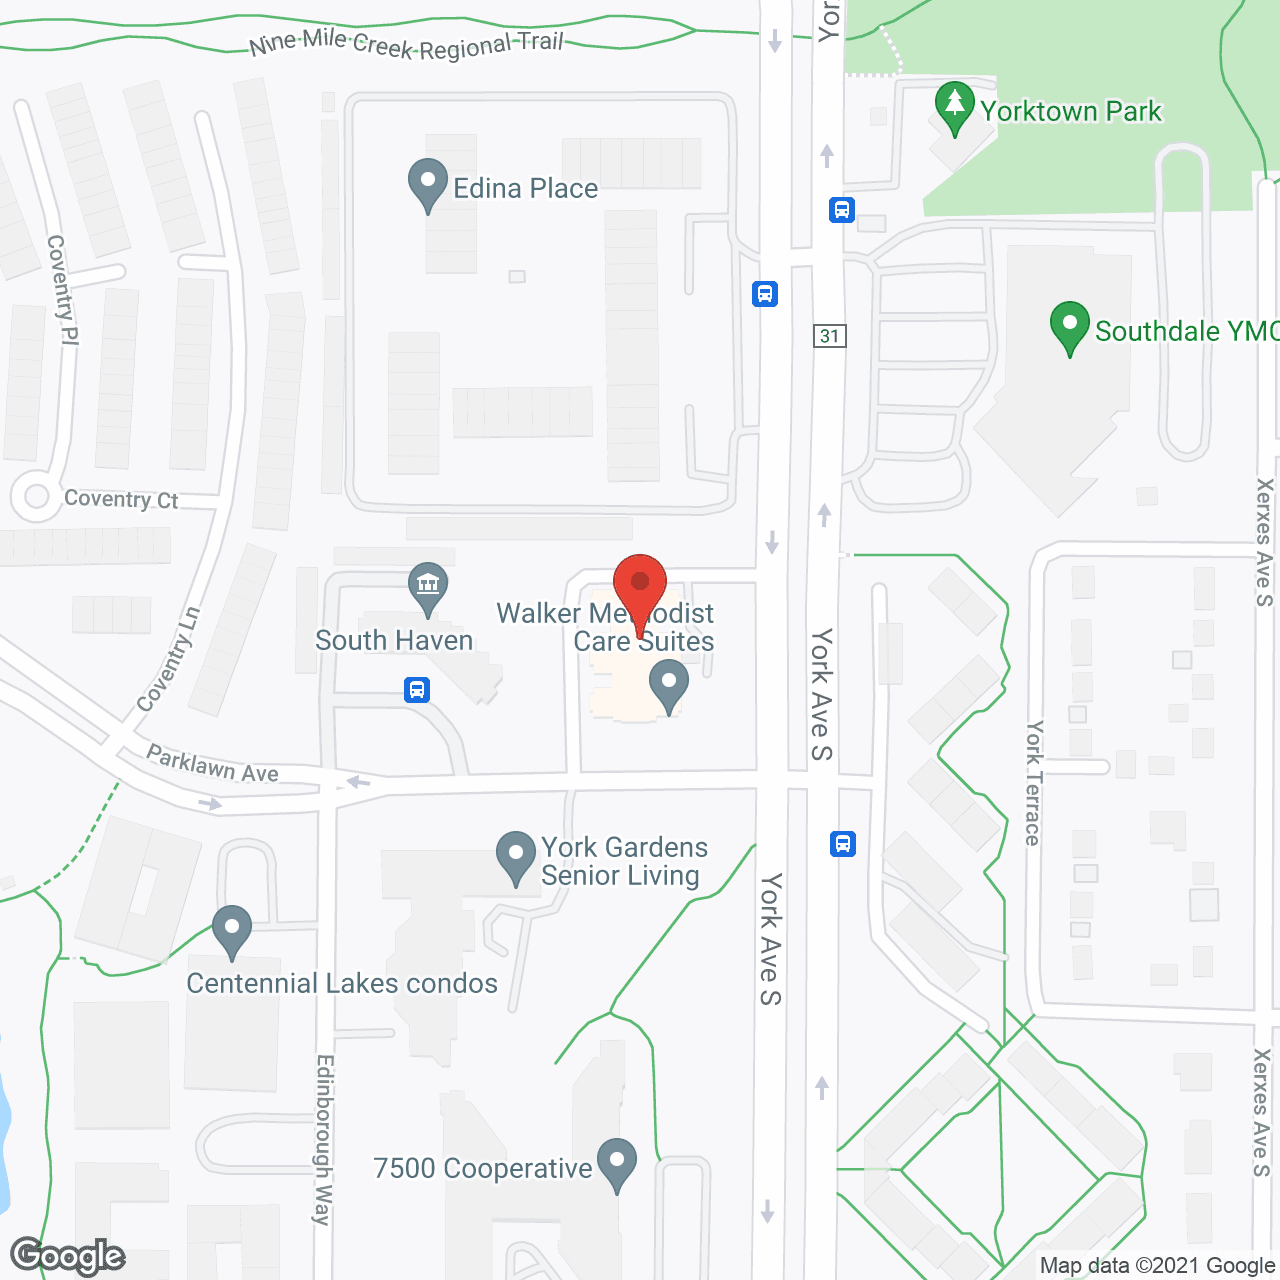 Walker Methodist Care Suites in google map